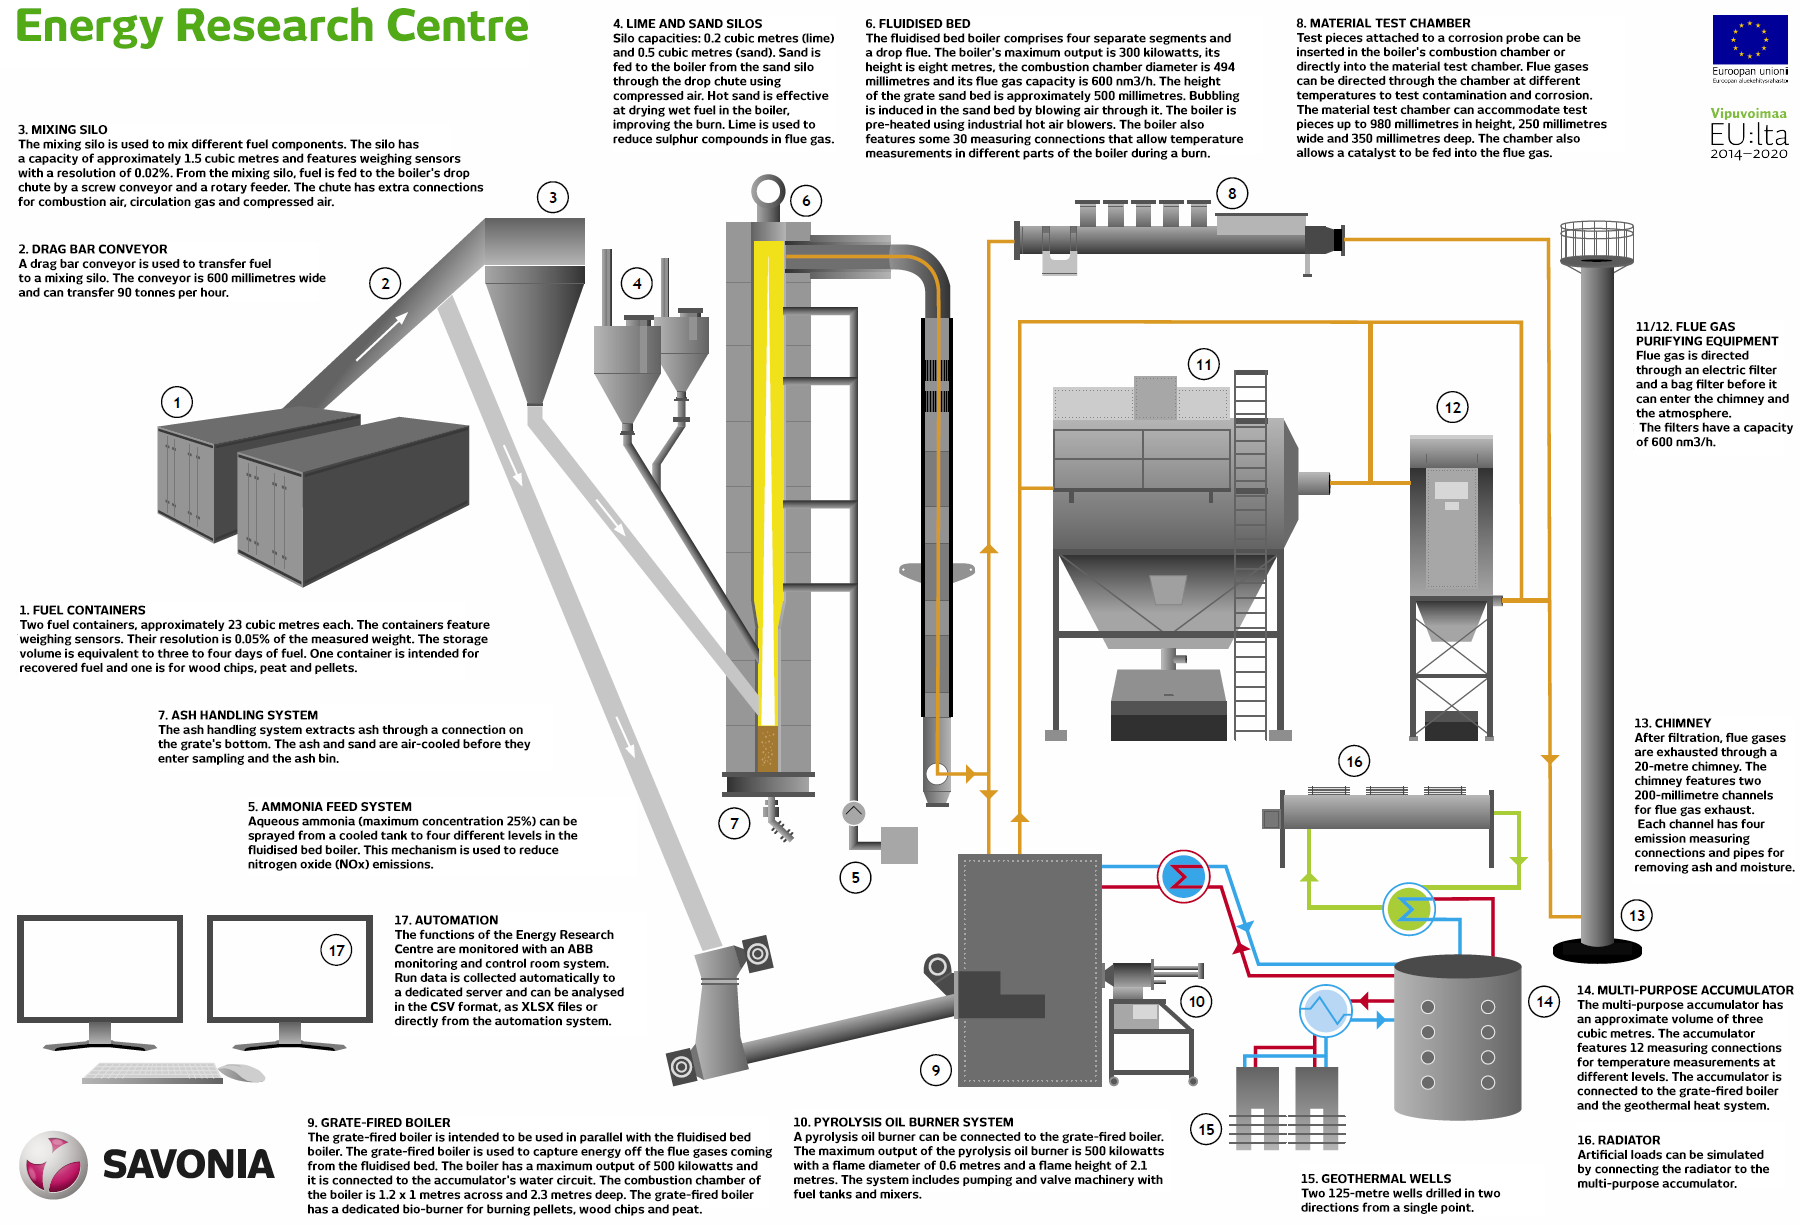 Energy Research Centre's Process flow chart.